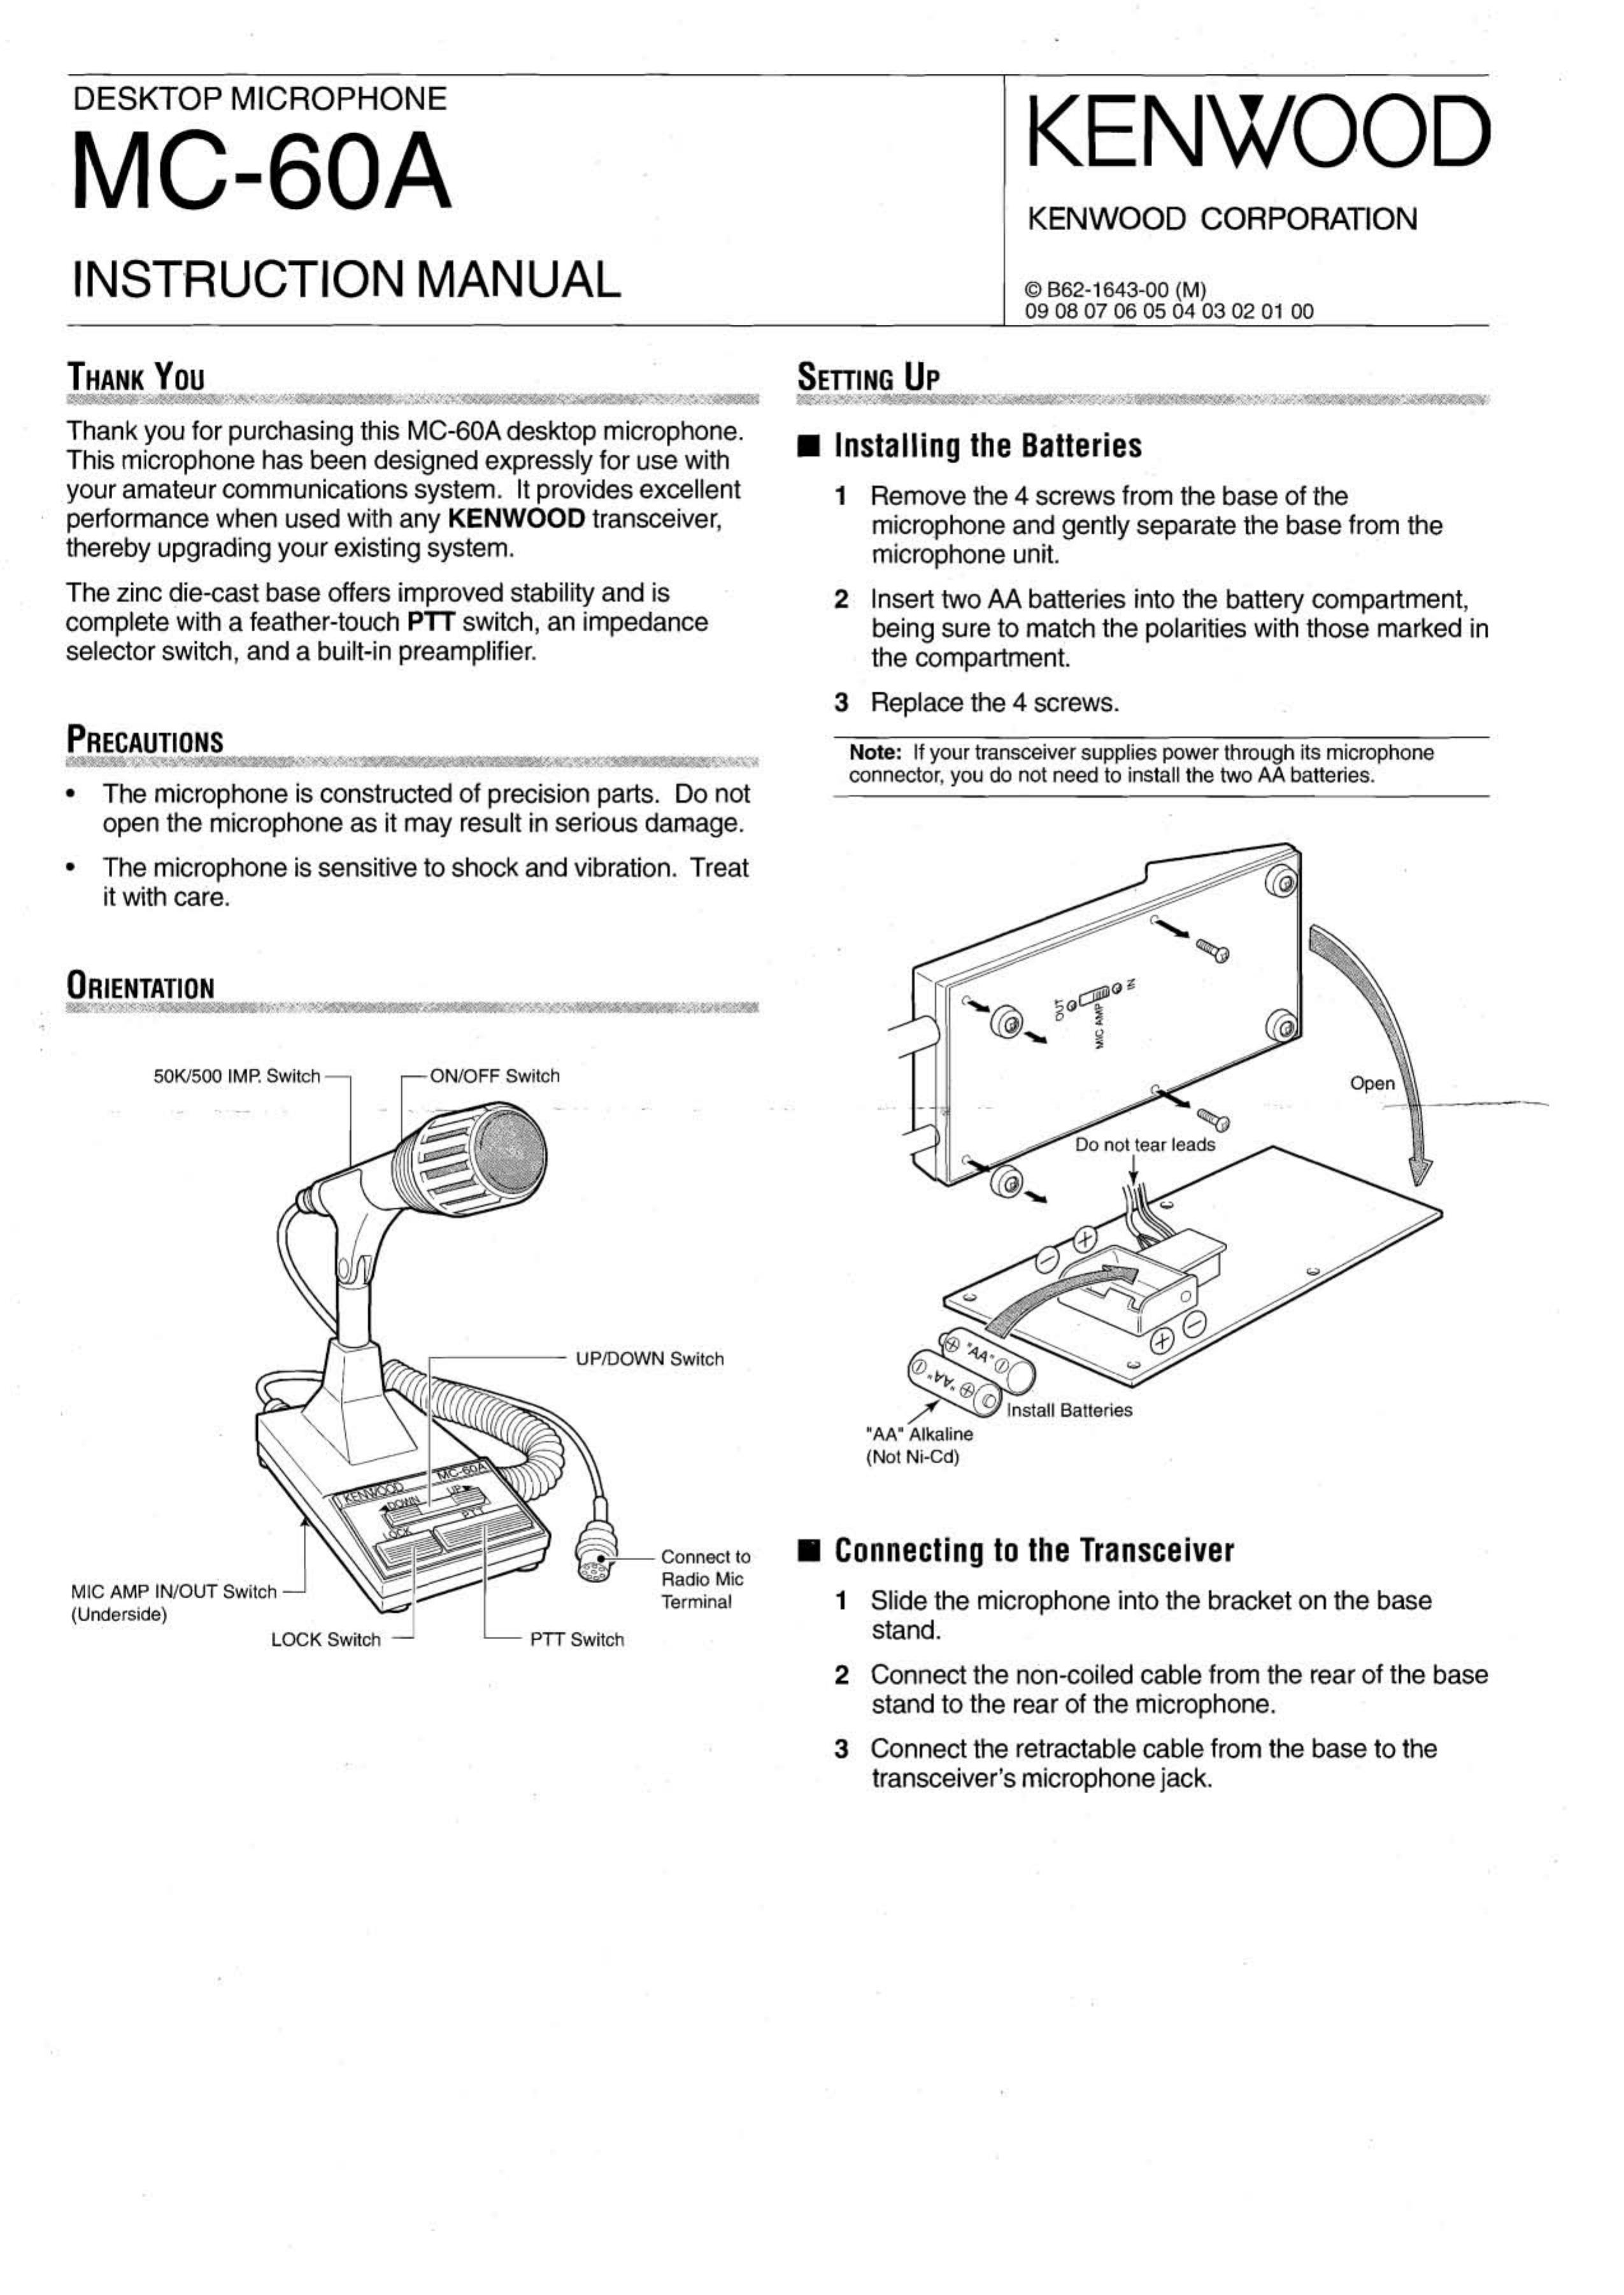 Kenwood MC-60A Microphone User Manual